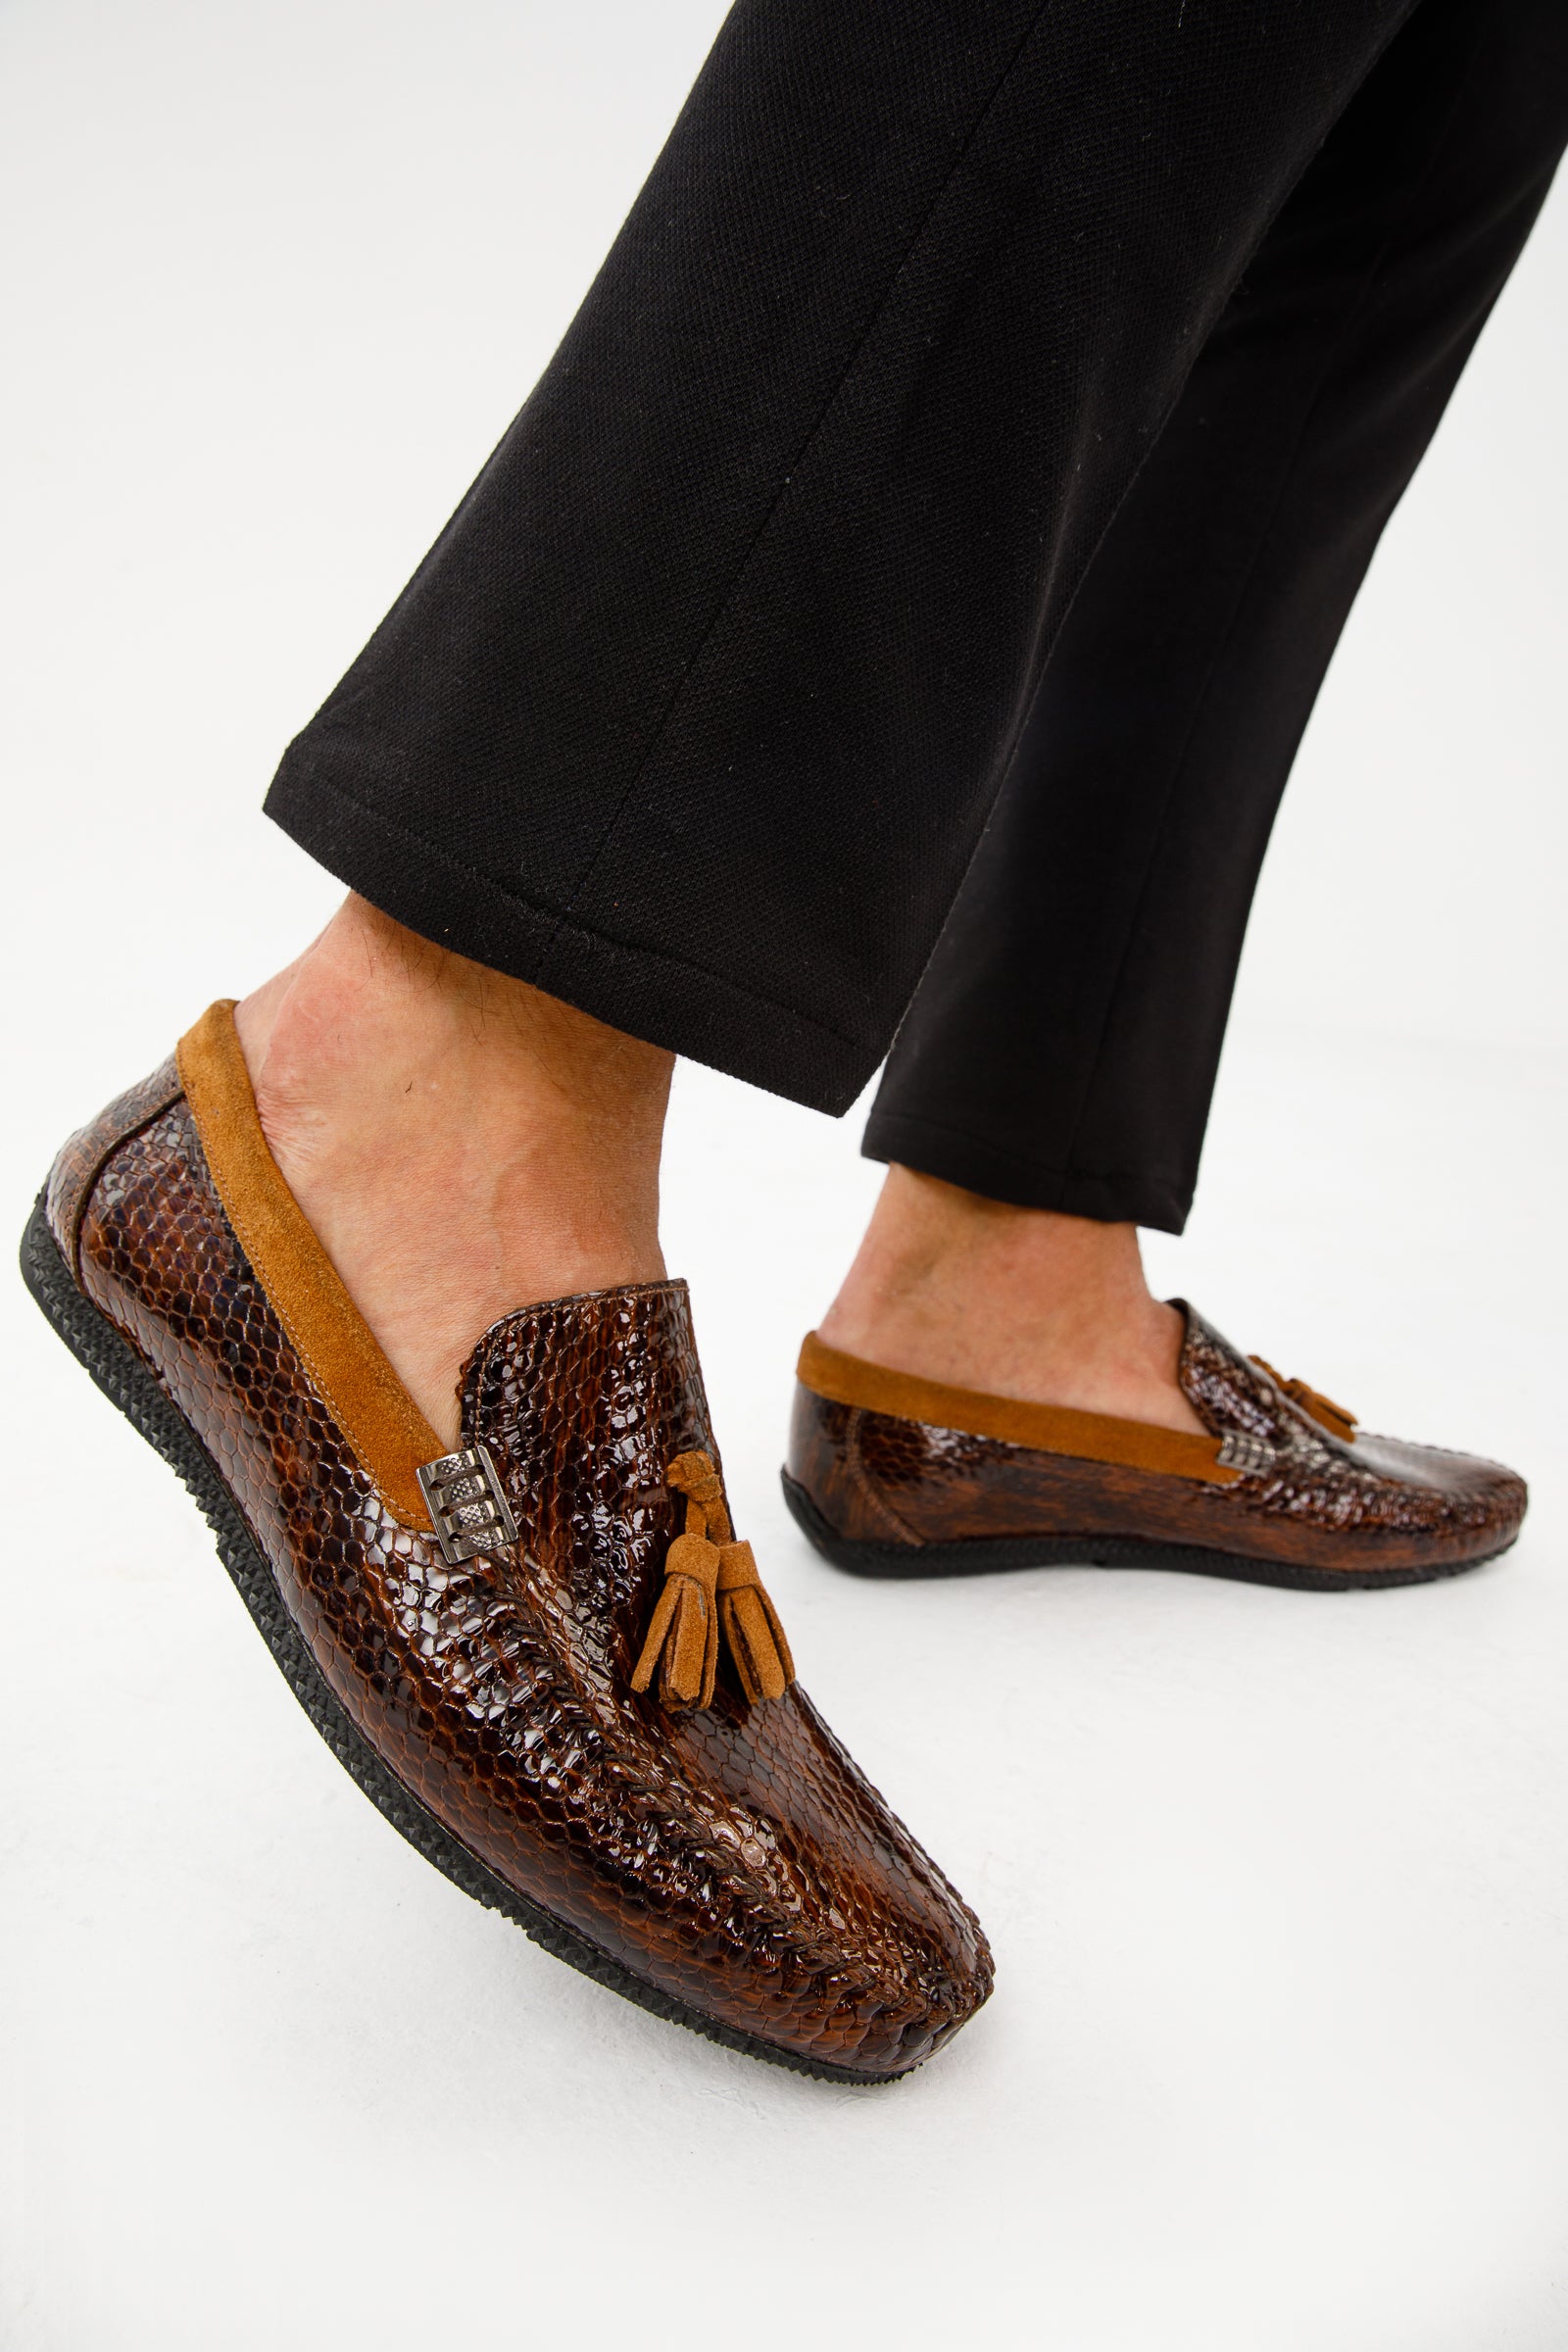 The Cordova Tan Patent Leather Tassel Loafer Men Shoe – Vinci 